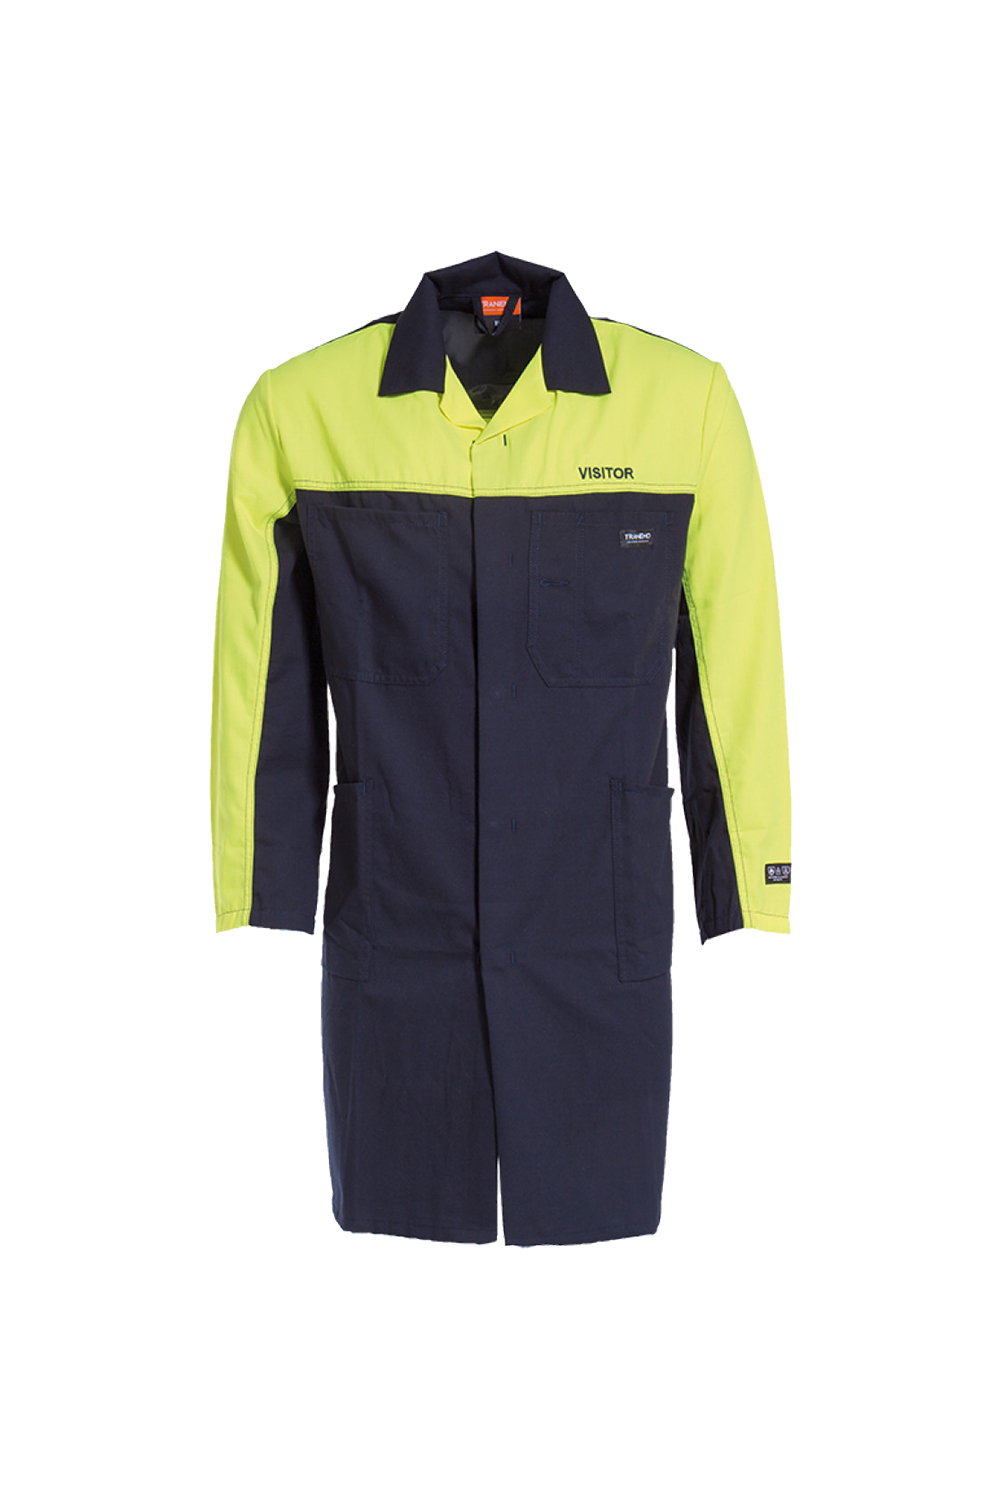 FR Visitor Jacket 5931 91 / Tranemo / Workwear